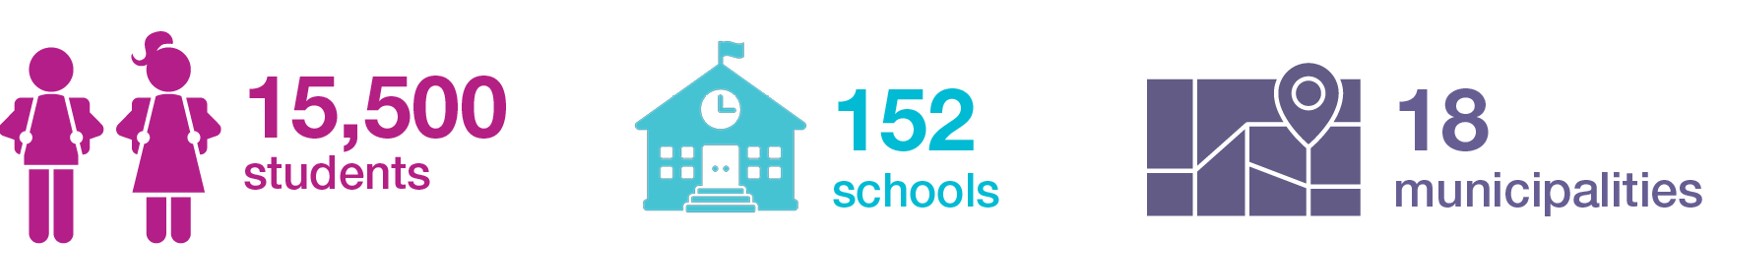 15,500 students. 152 schools. 18 municipalities.